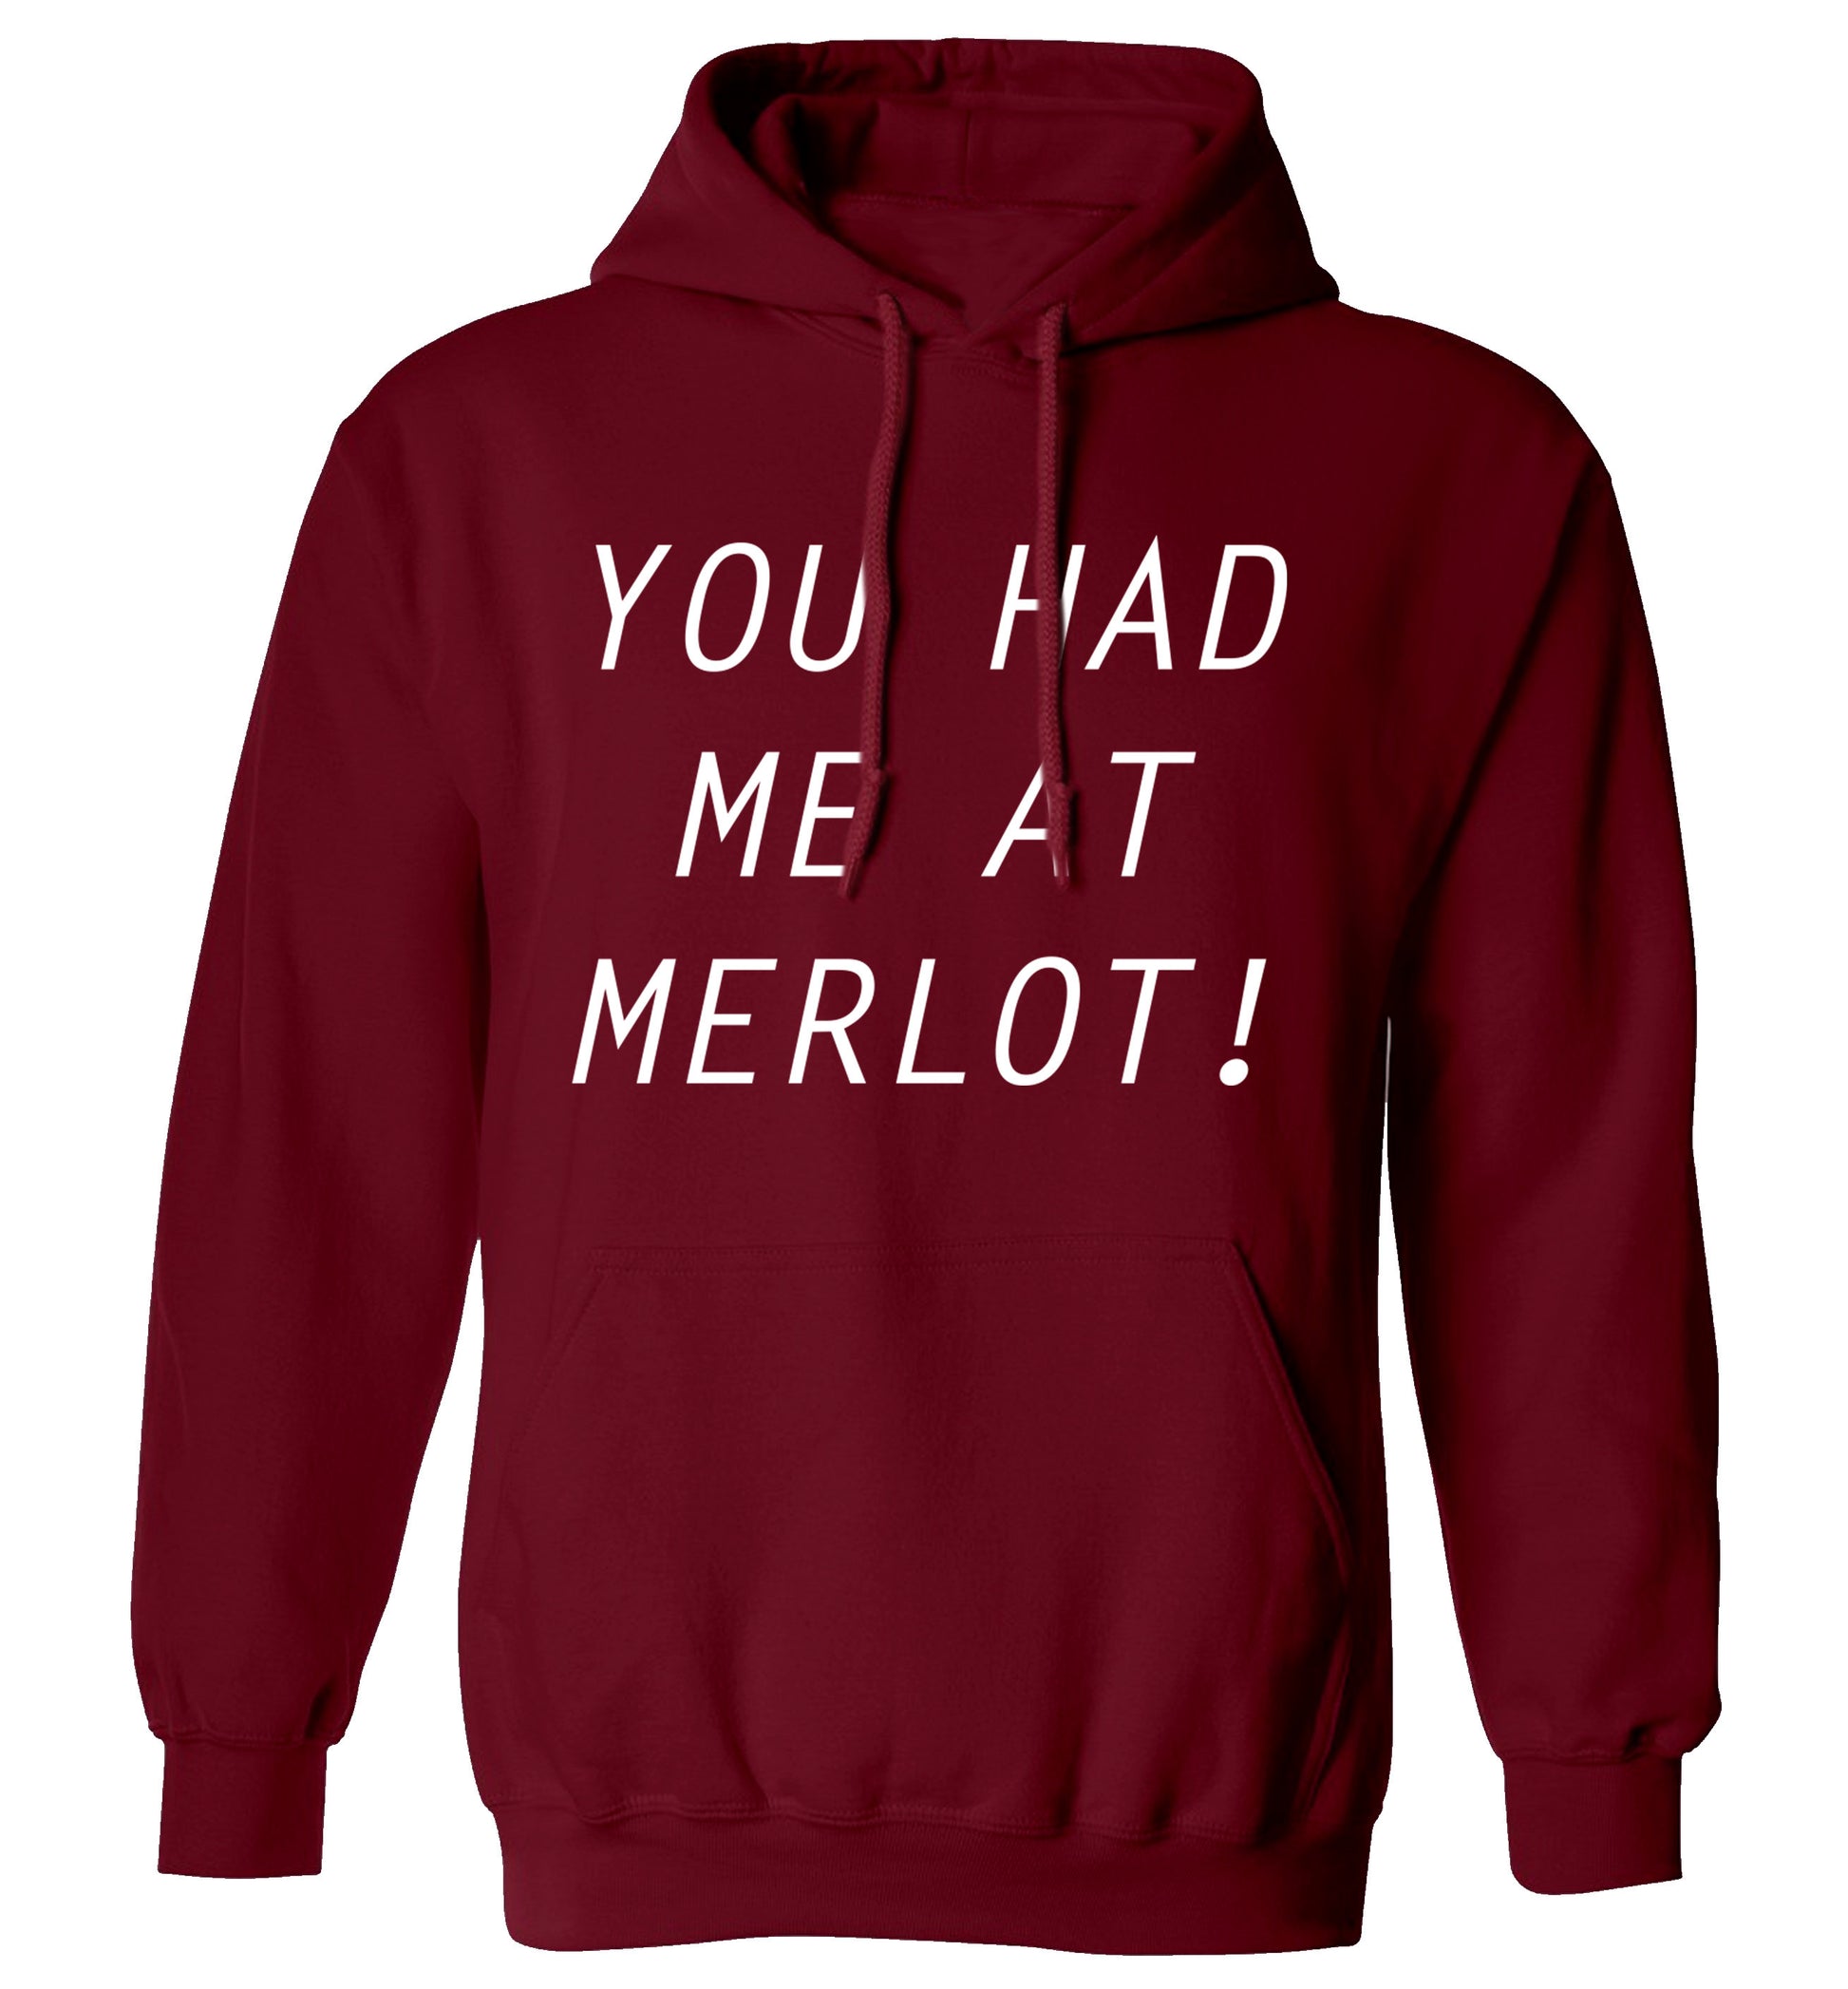 You had me at merlot adults unisex maroon hoodie 2XL